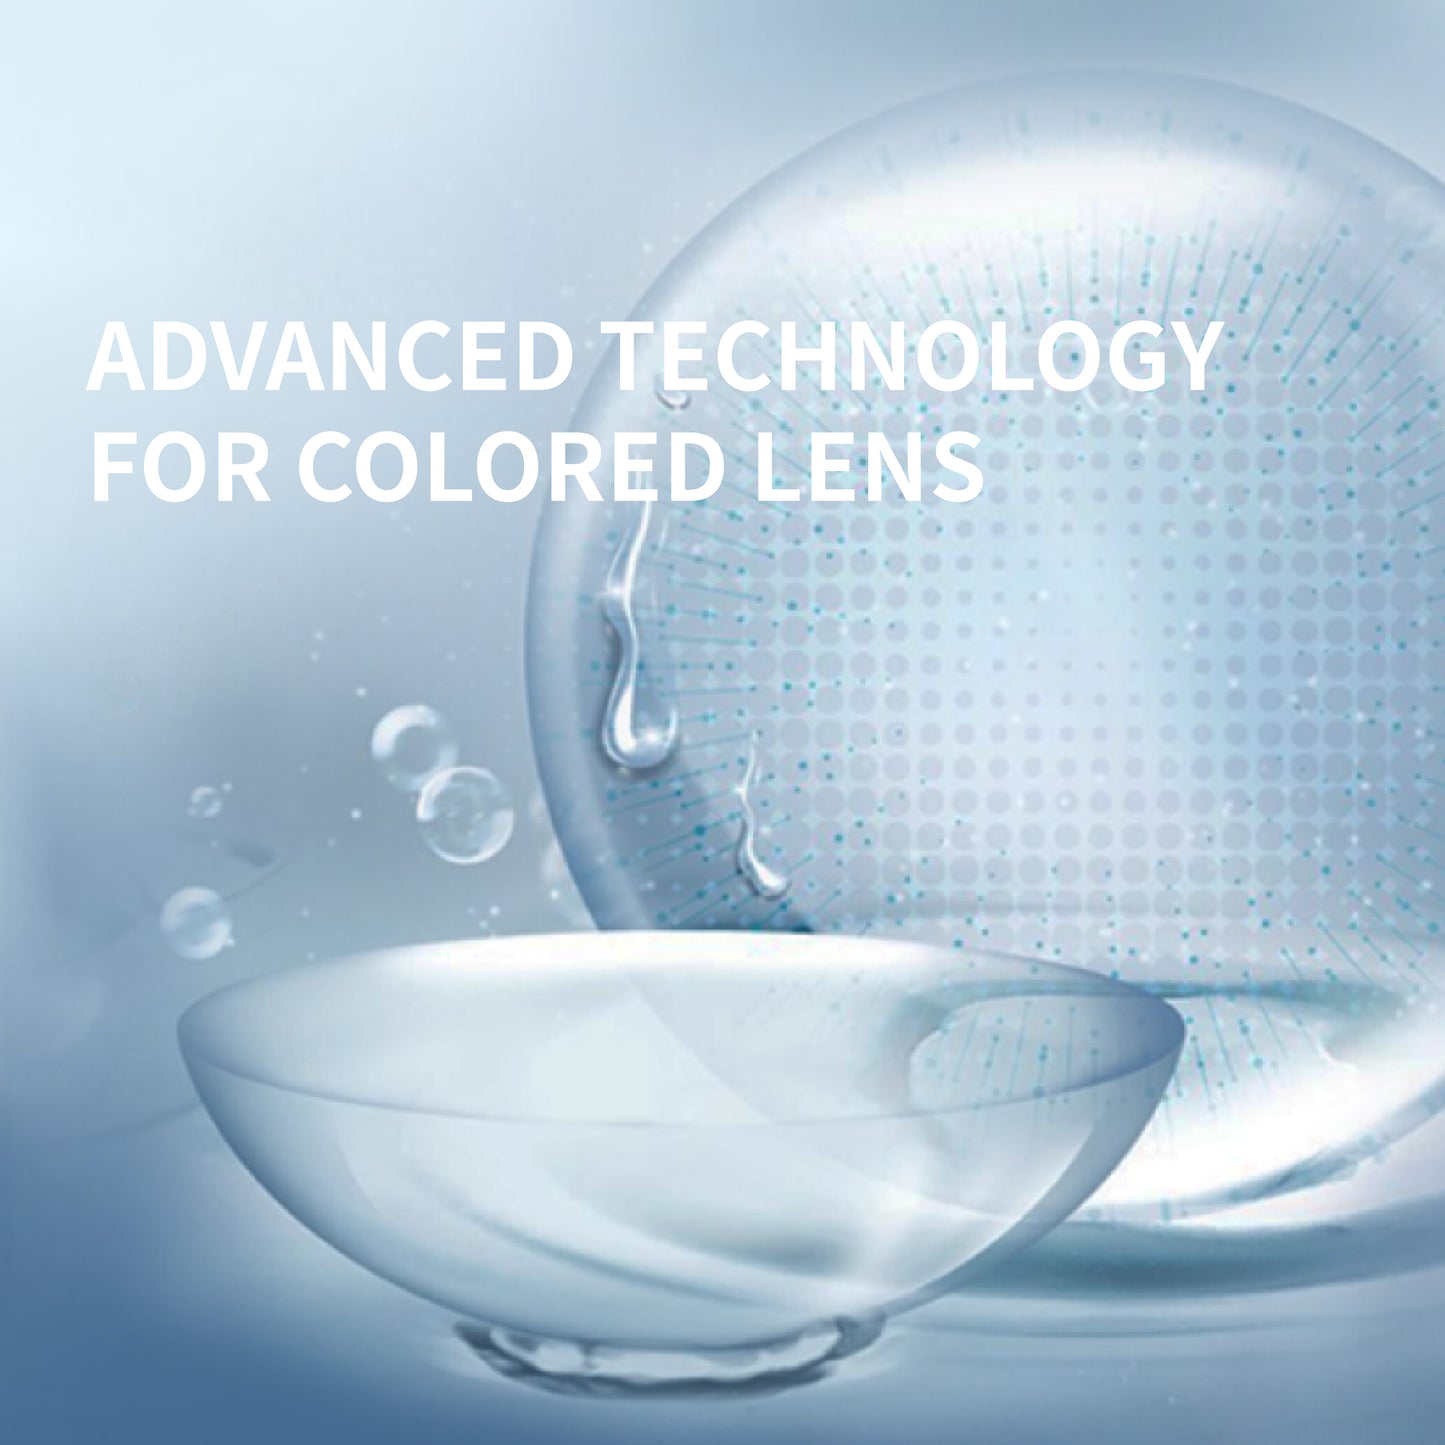 1Pcs  FDA Certificate Eyes Colorful Contact Lenses - Wonderland choco